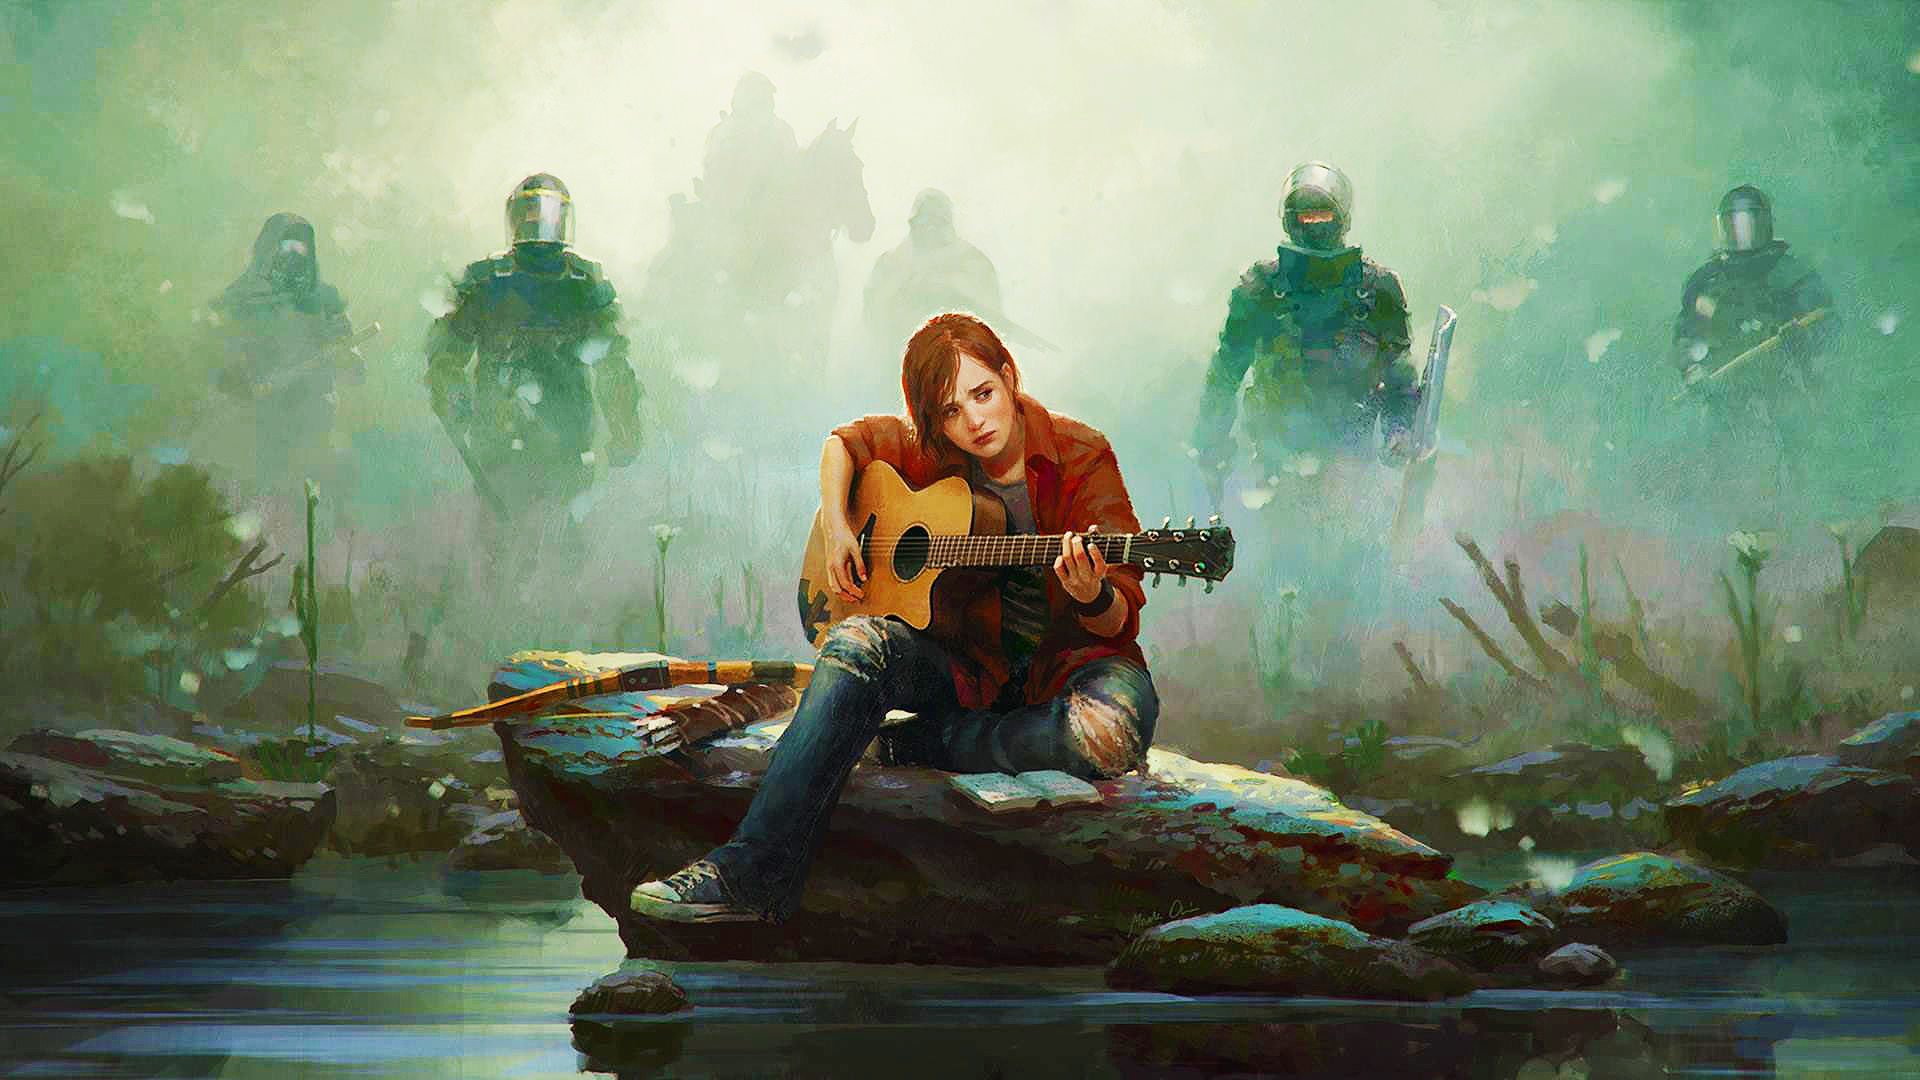 The Last Of Us Wallpaper Hd Pixelstalknet